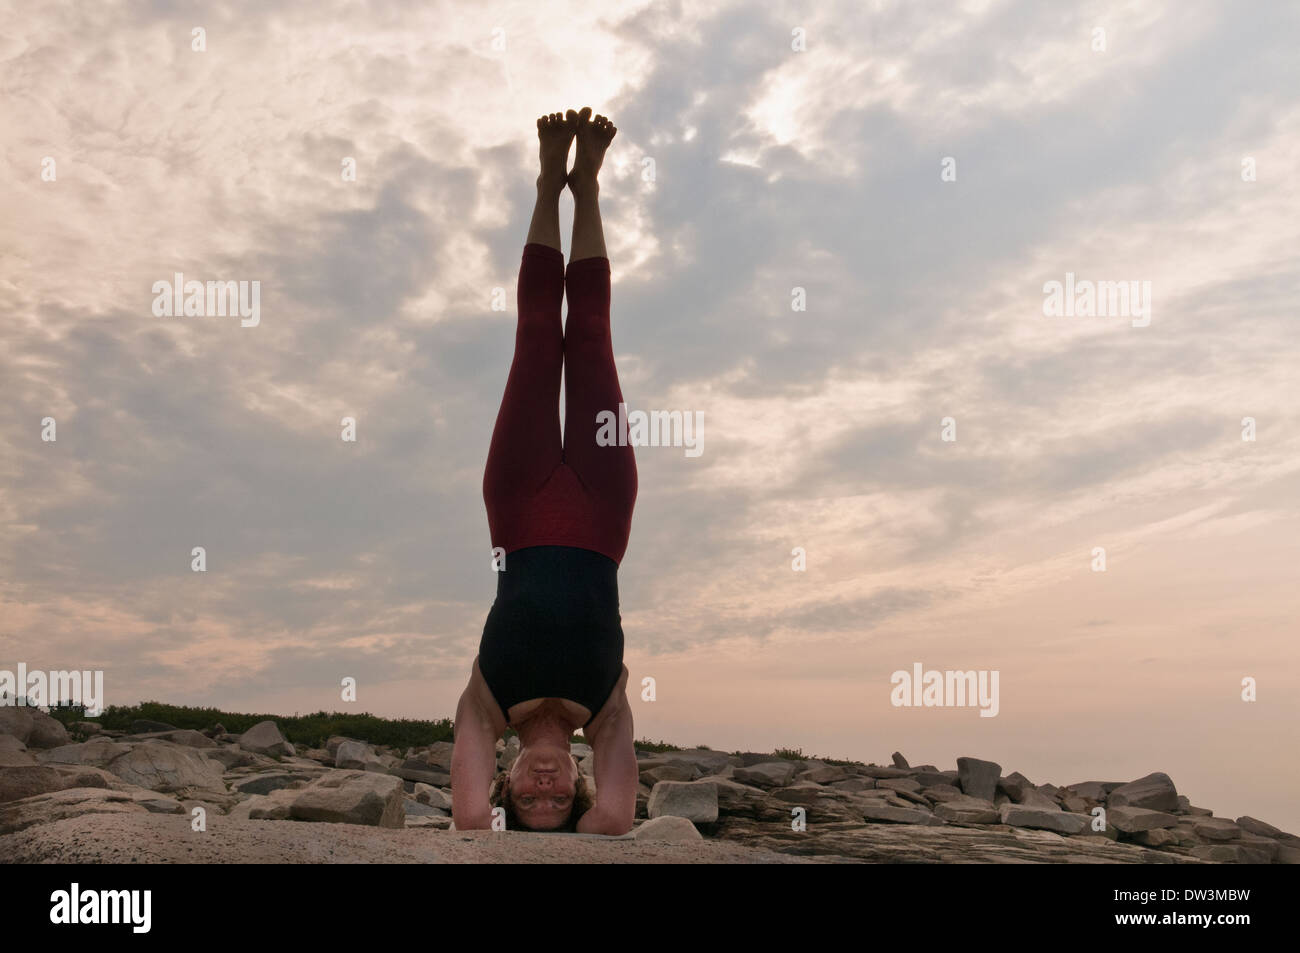 Iyengar Yoga Instructor Demonstrates Sirsasana (Inverted). Stock Photo